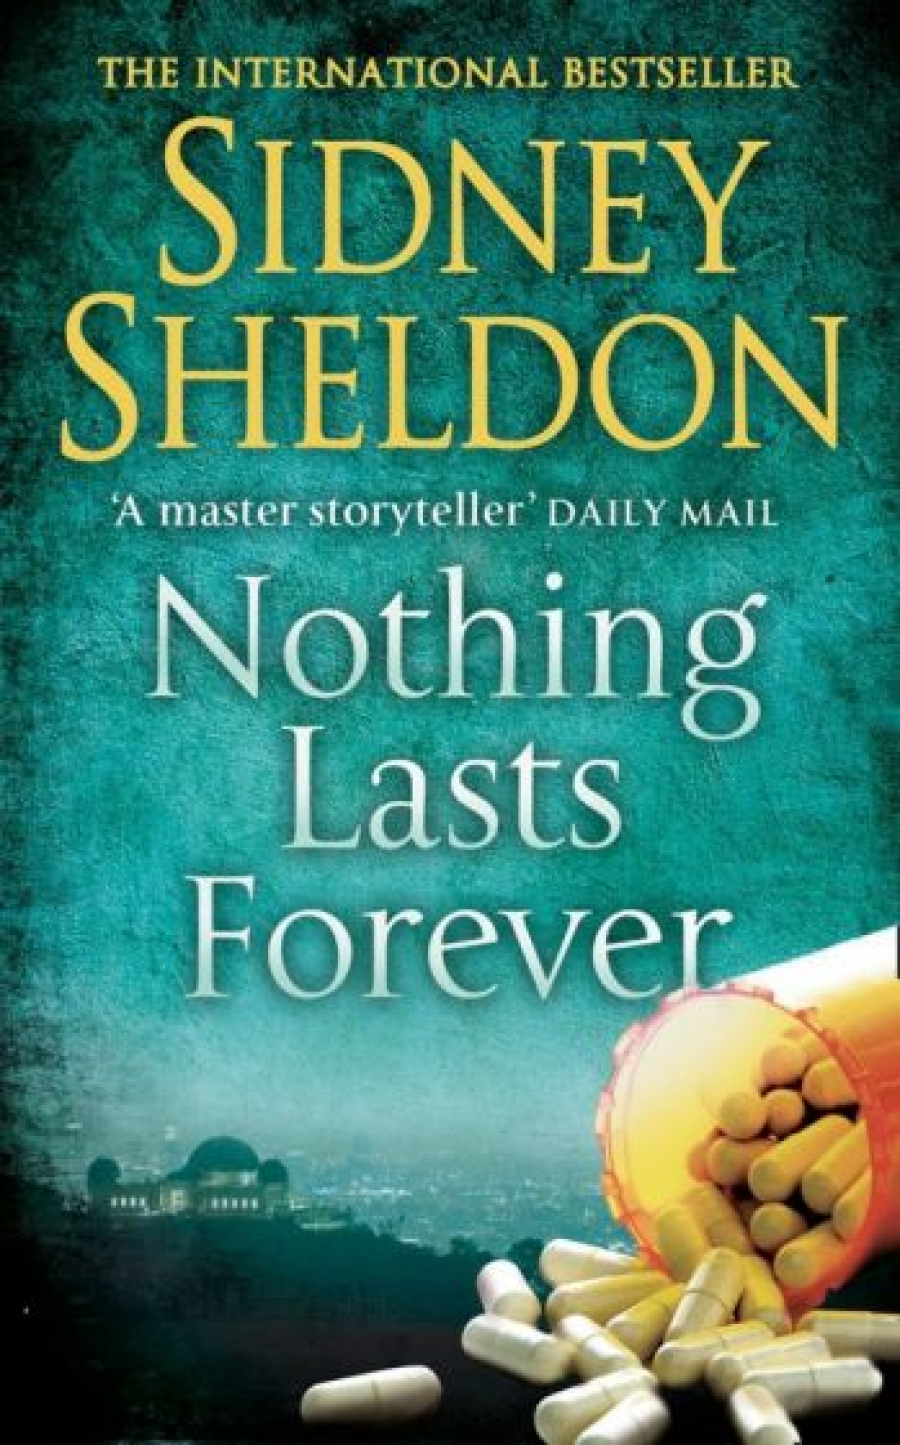 Sheldon Sidney Nothing Lasts Forever 